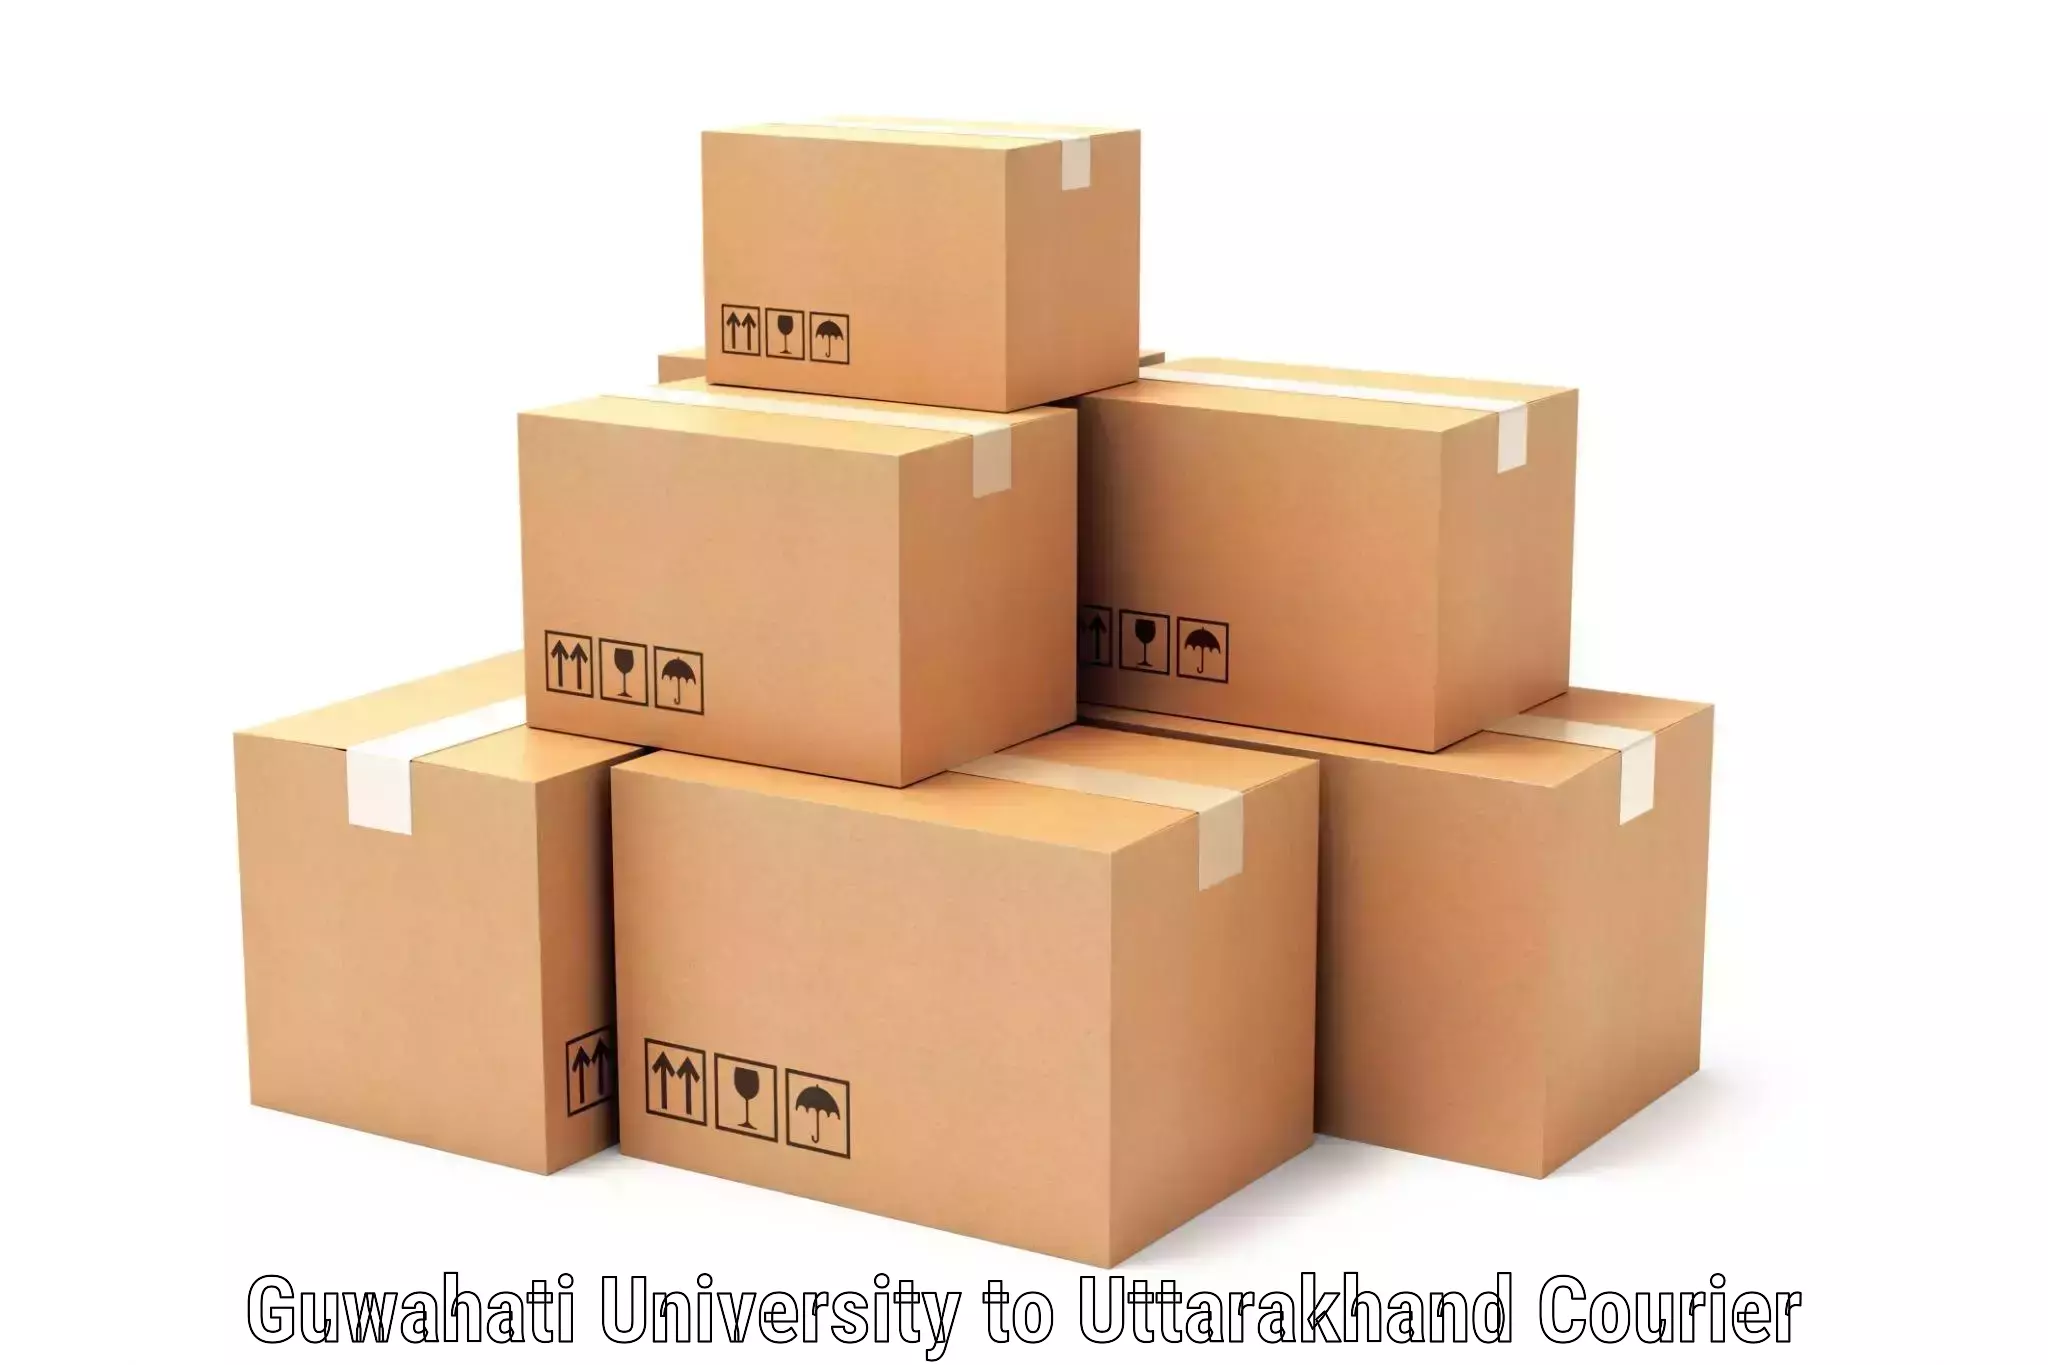 Tailored freight services Guwahati University to Uttarkashi